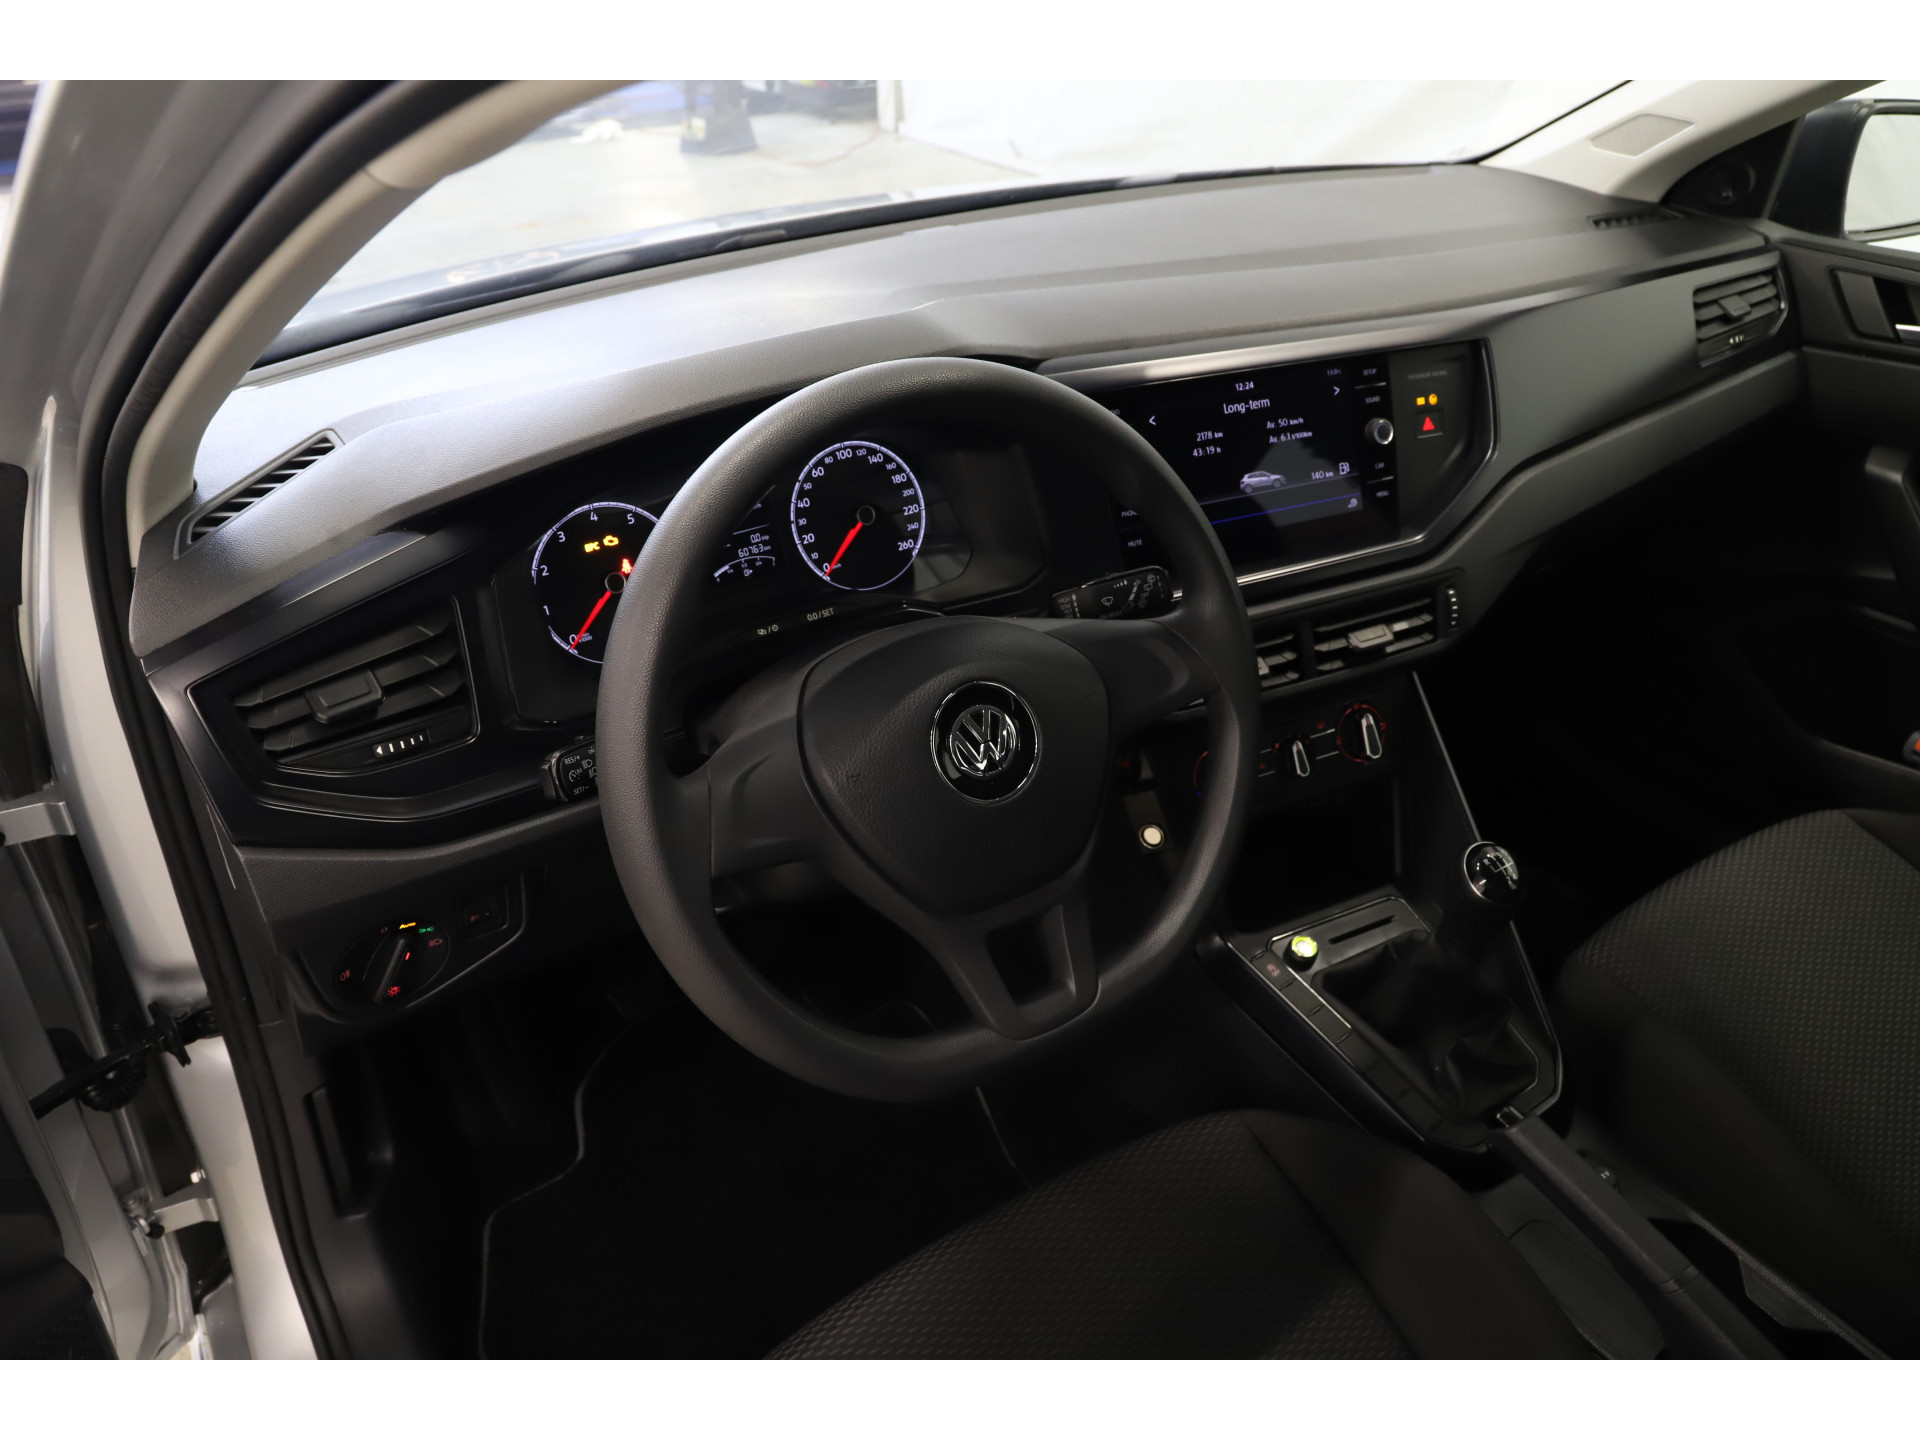 Volkswagen - Polo 1.0 MPI Trendline - 2019